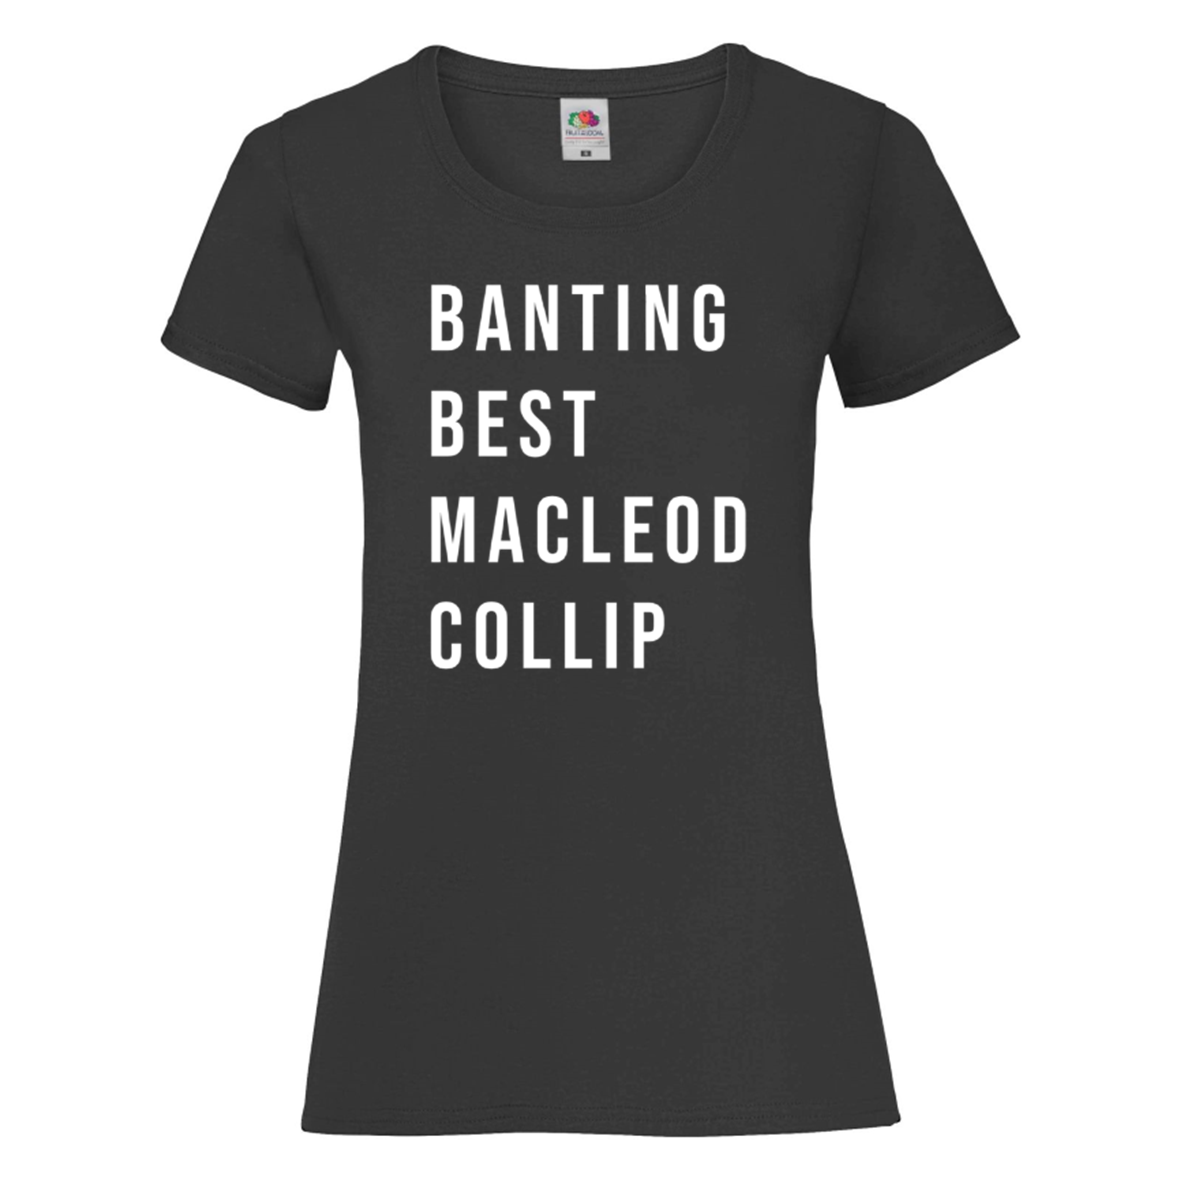 Banting, Best, Macleod & Collip Women's T Shirt